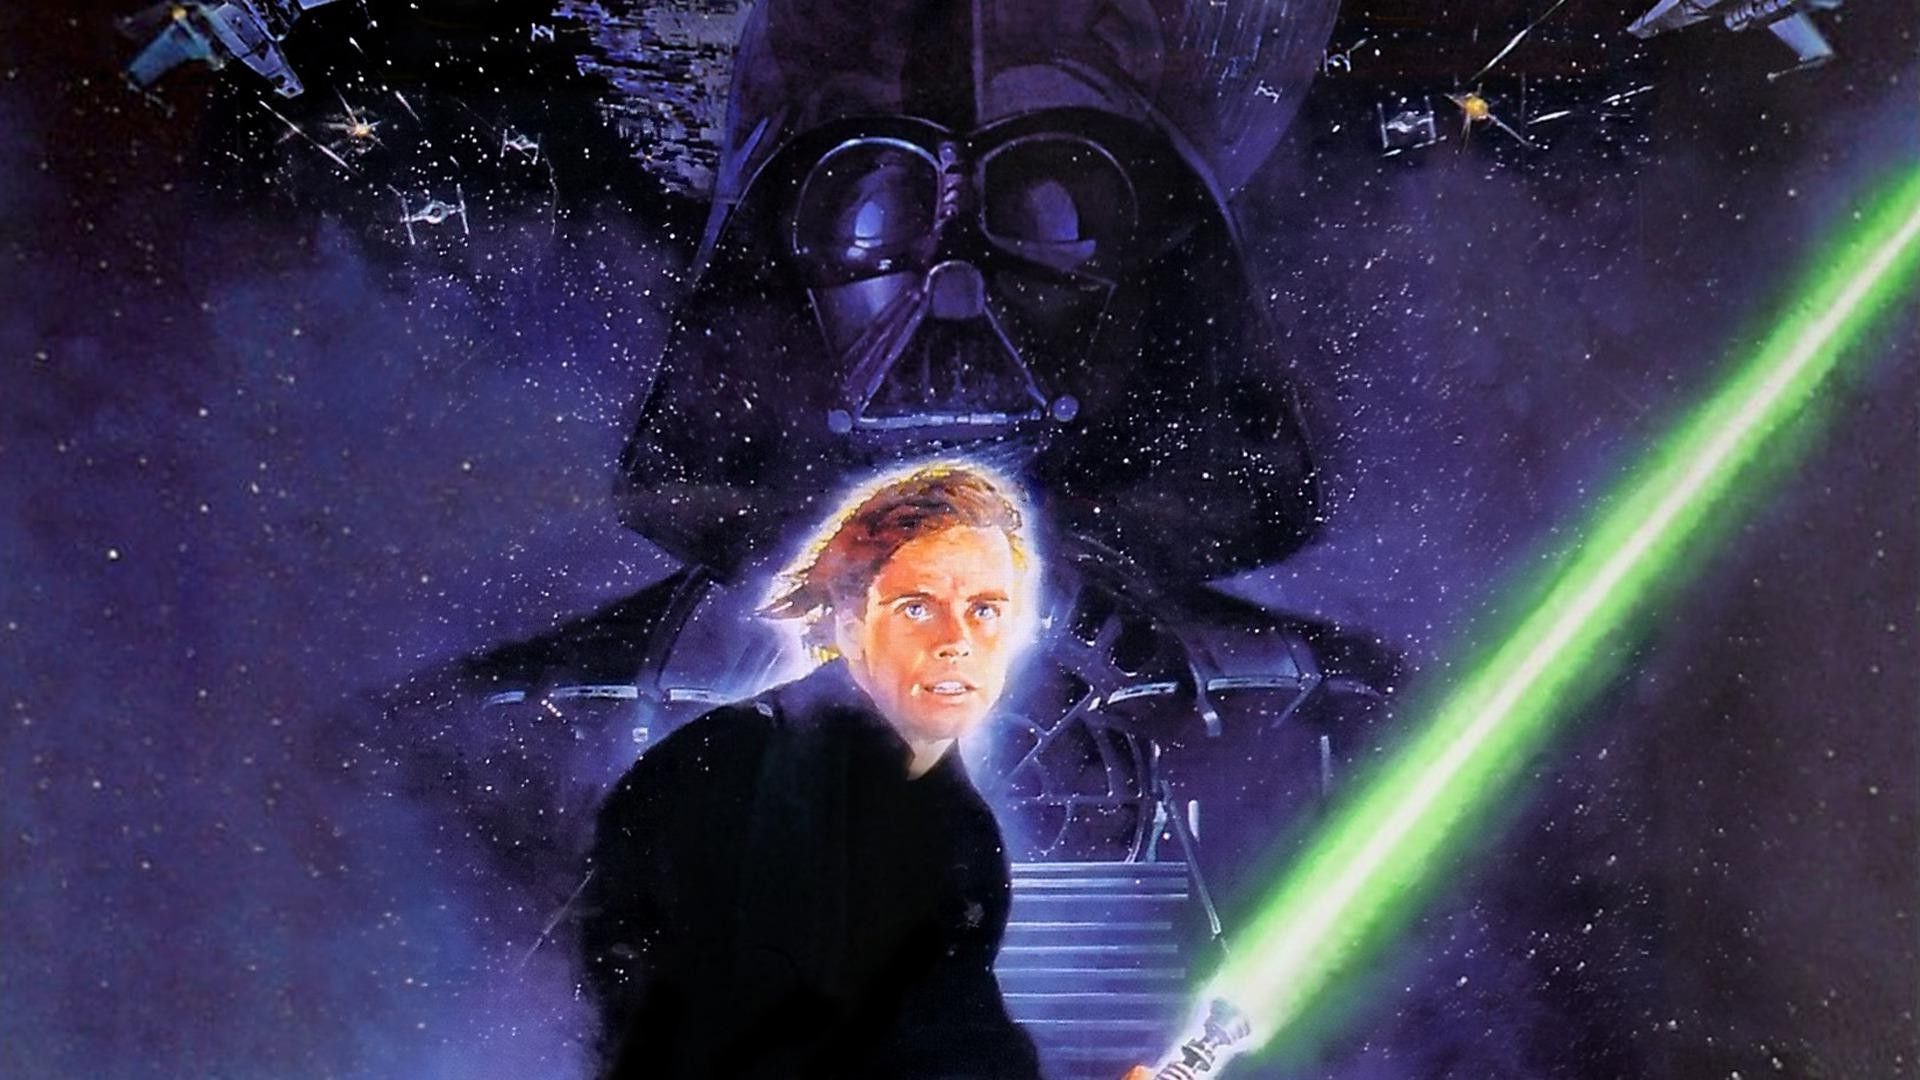 Luke Skywalker Vs Darth Vader Desktop Wallpapers - Wallpaper Cave